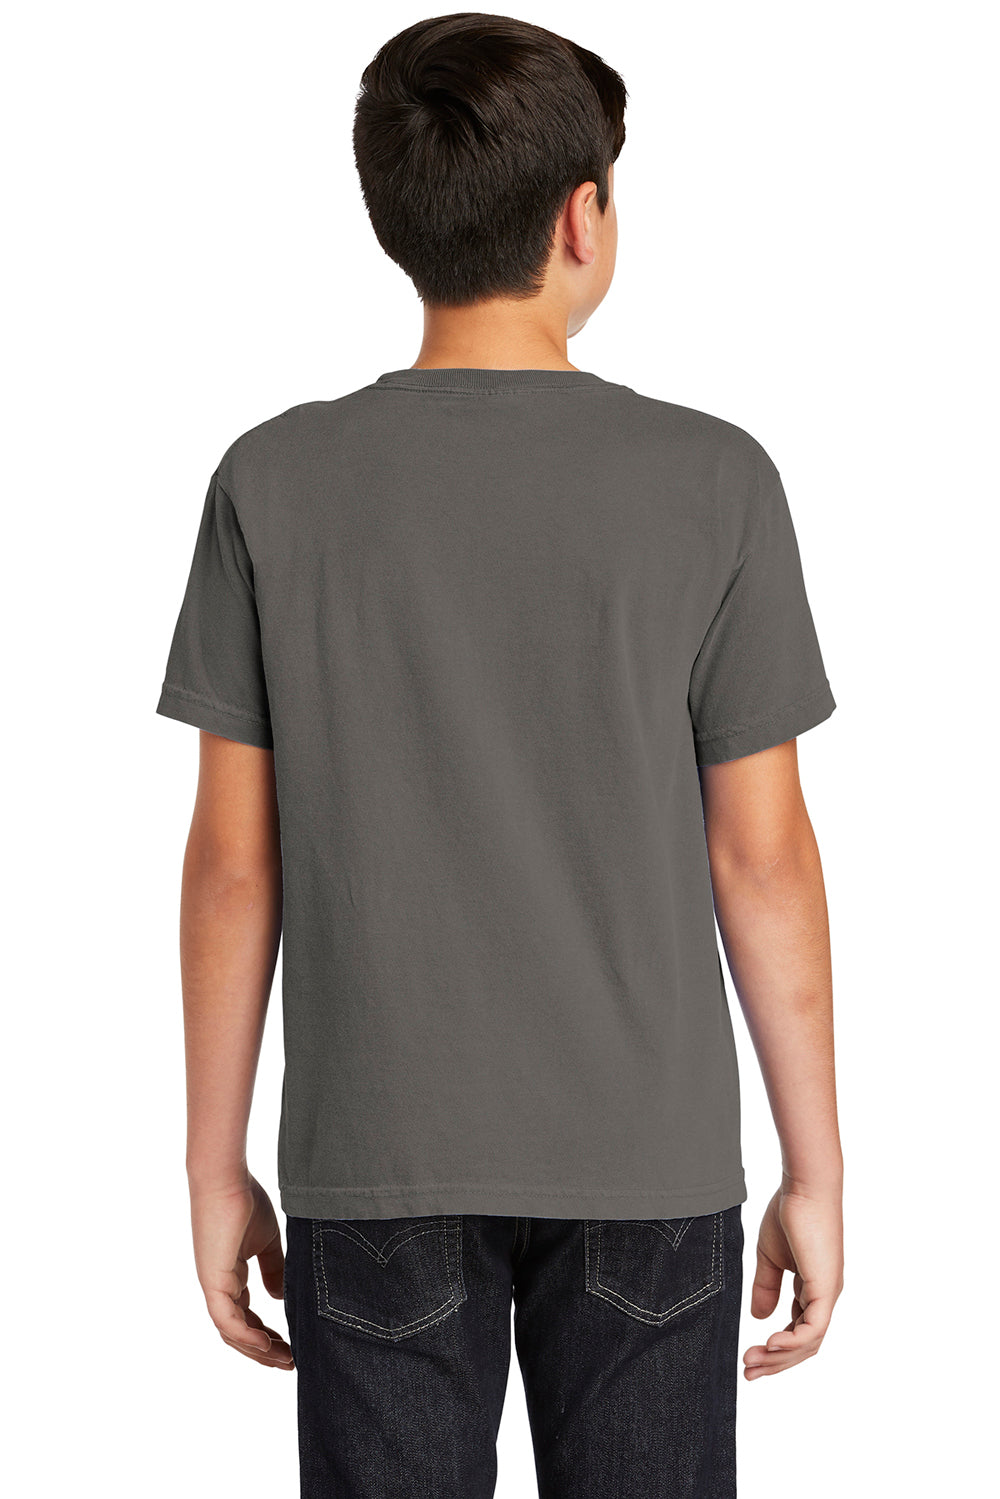 Comfort Colors 9018/C9018 Youth Short Sleeve Crewneck T-Shirt Grey Back